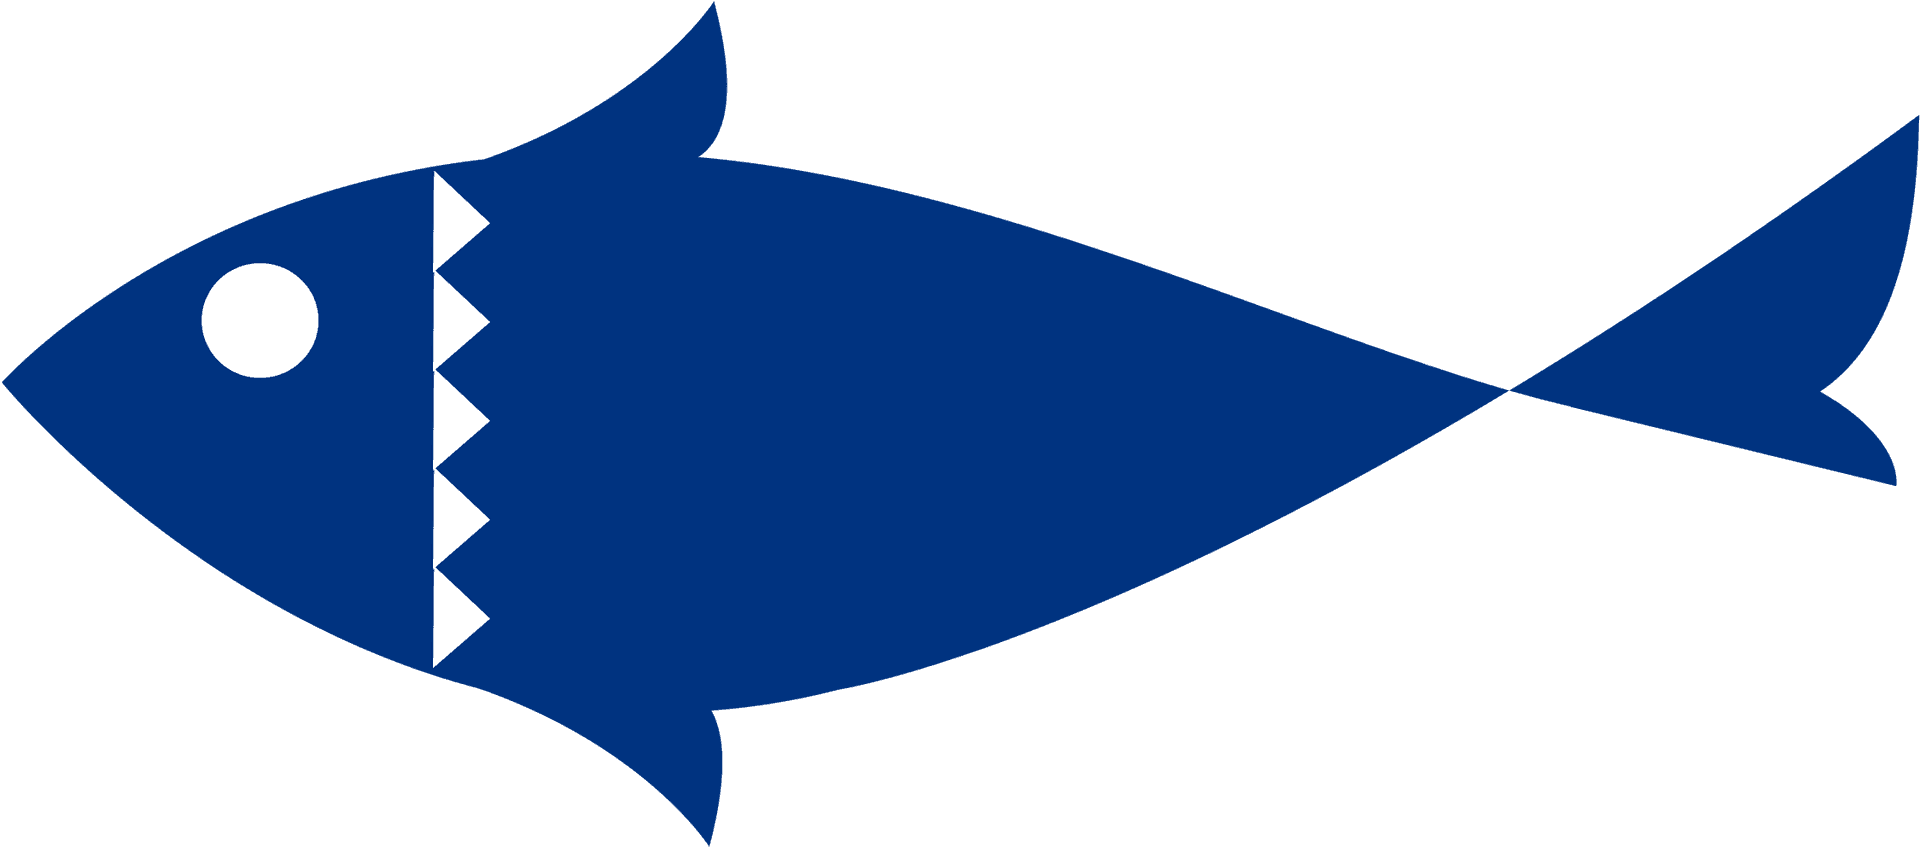 Stylized Blue Tuna Graphic PNG